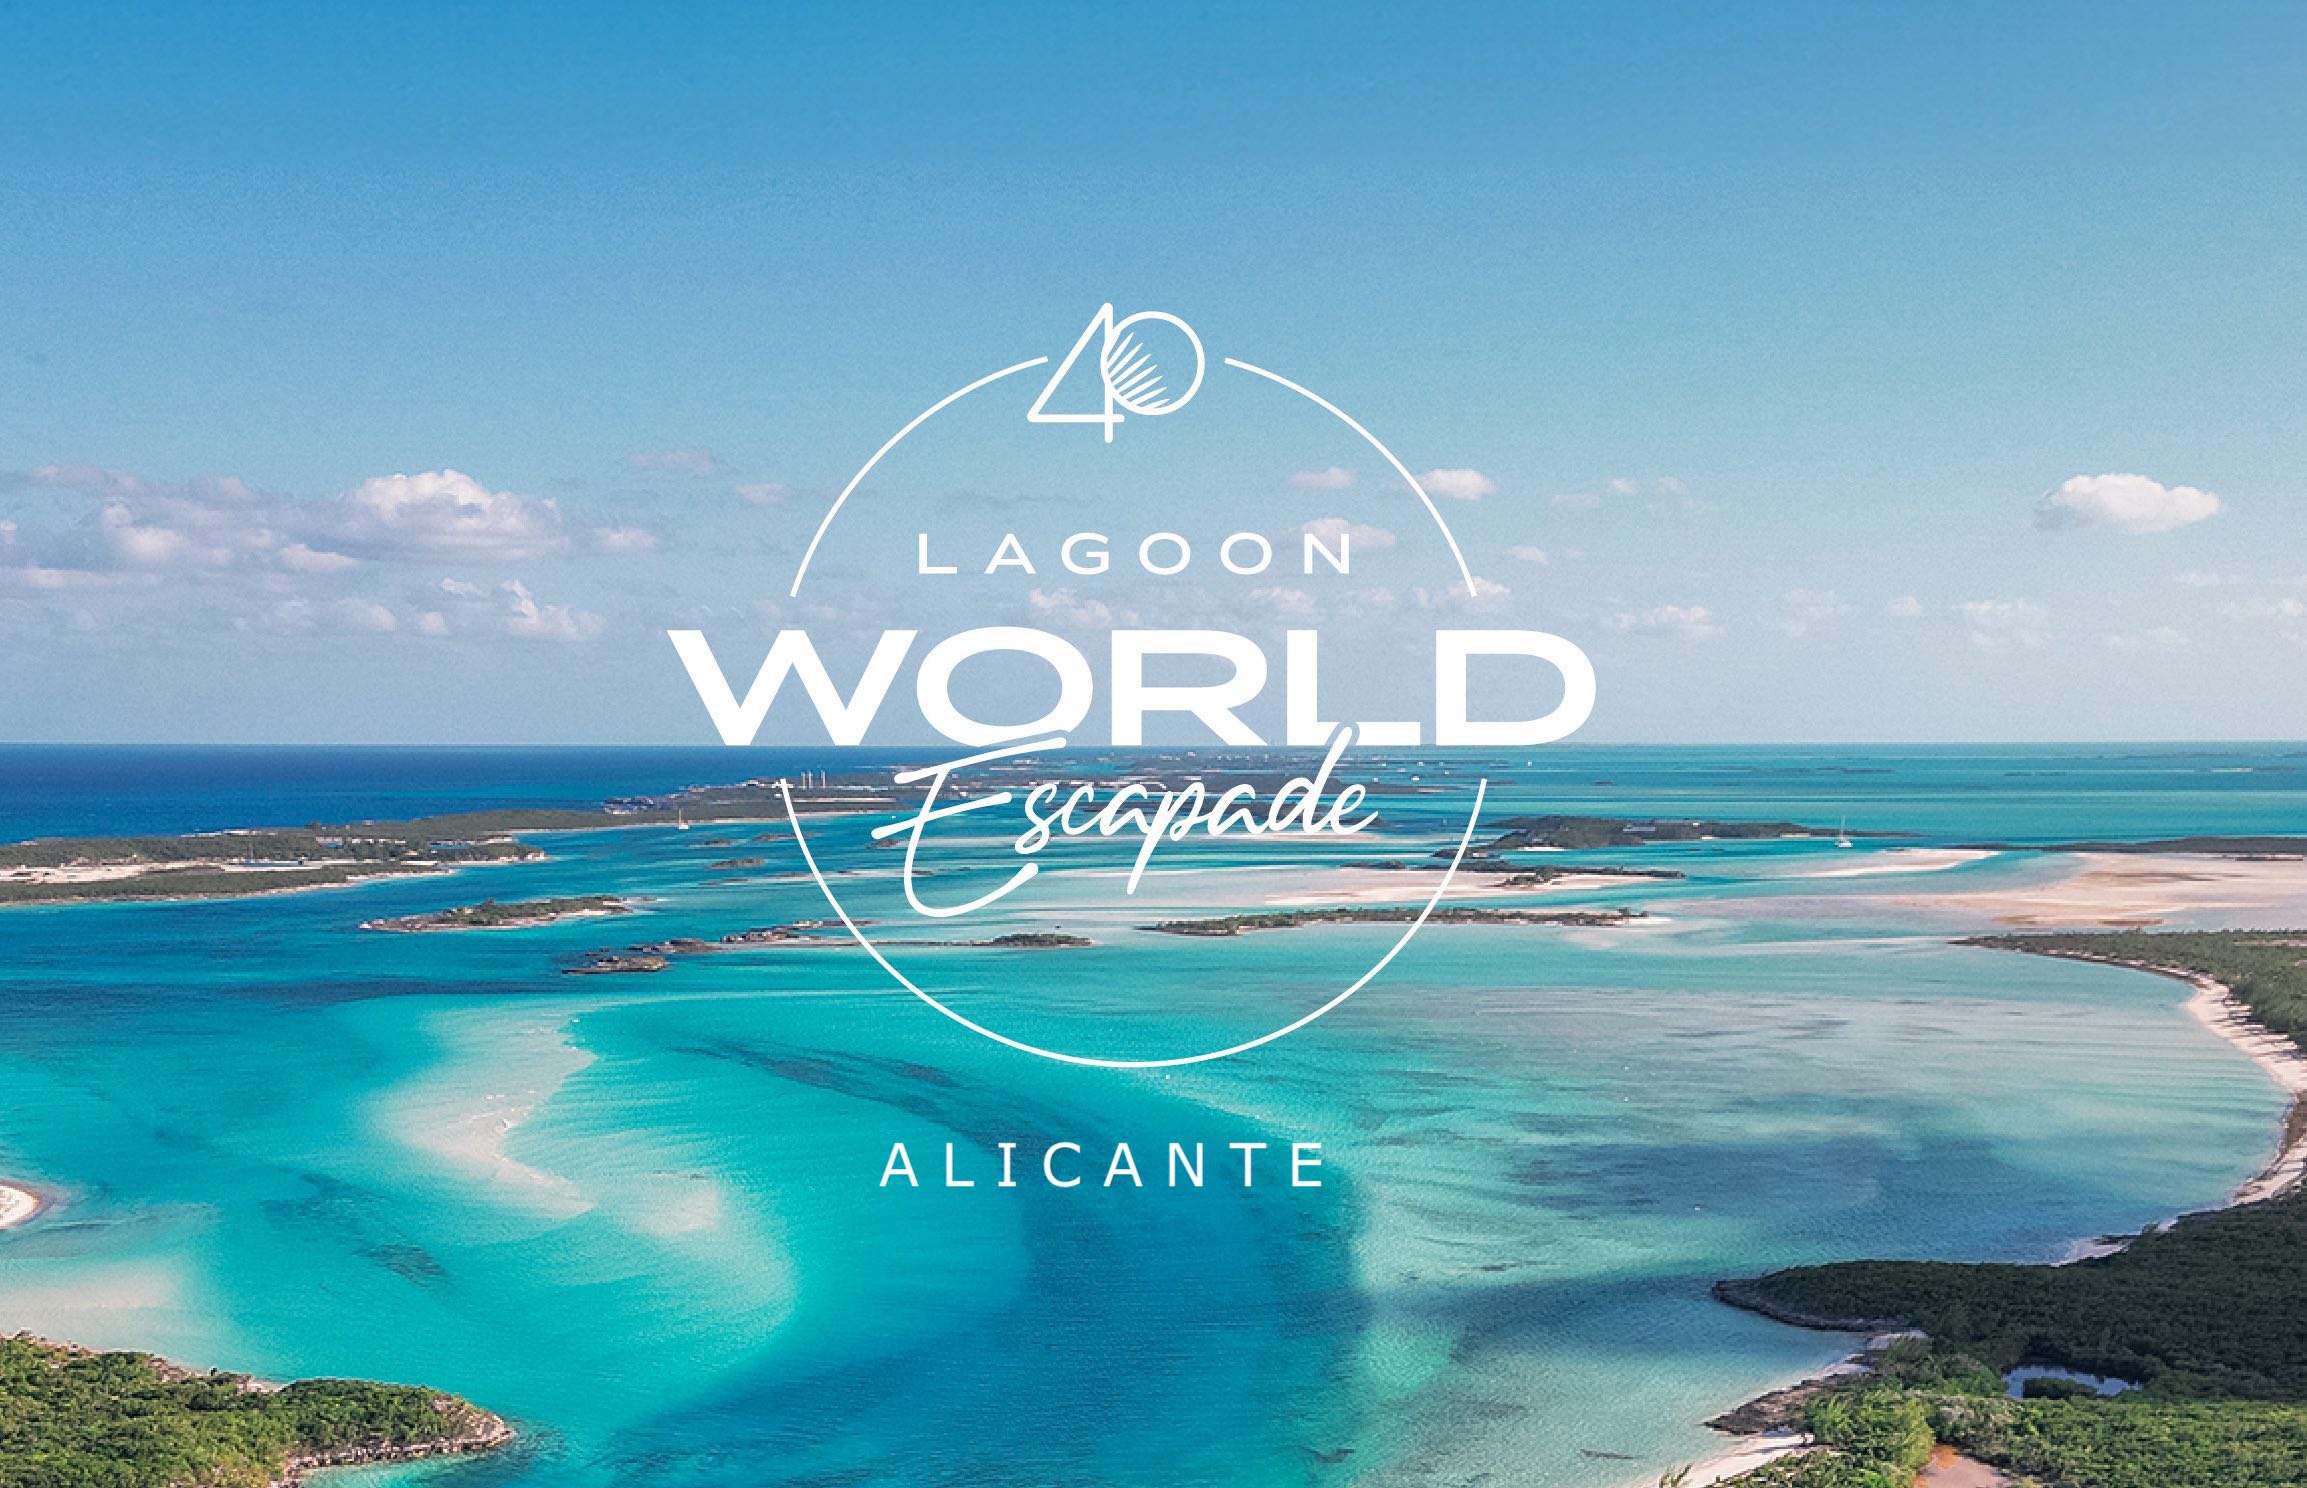 Lagoon World Wide Escapade - Alicante